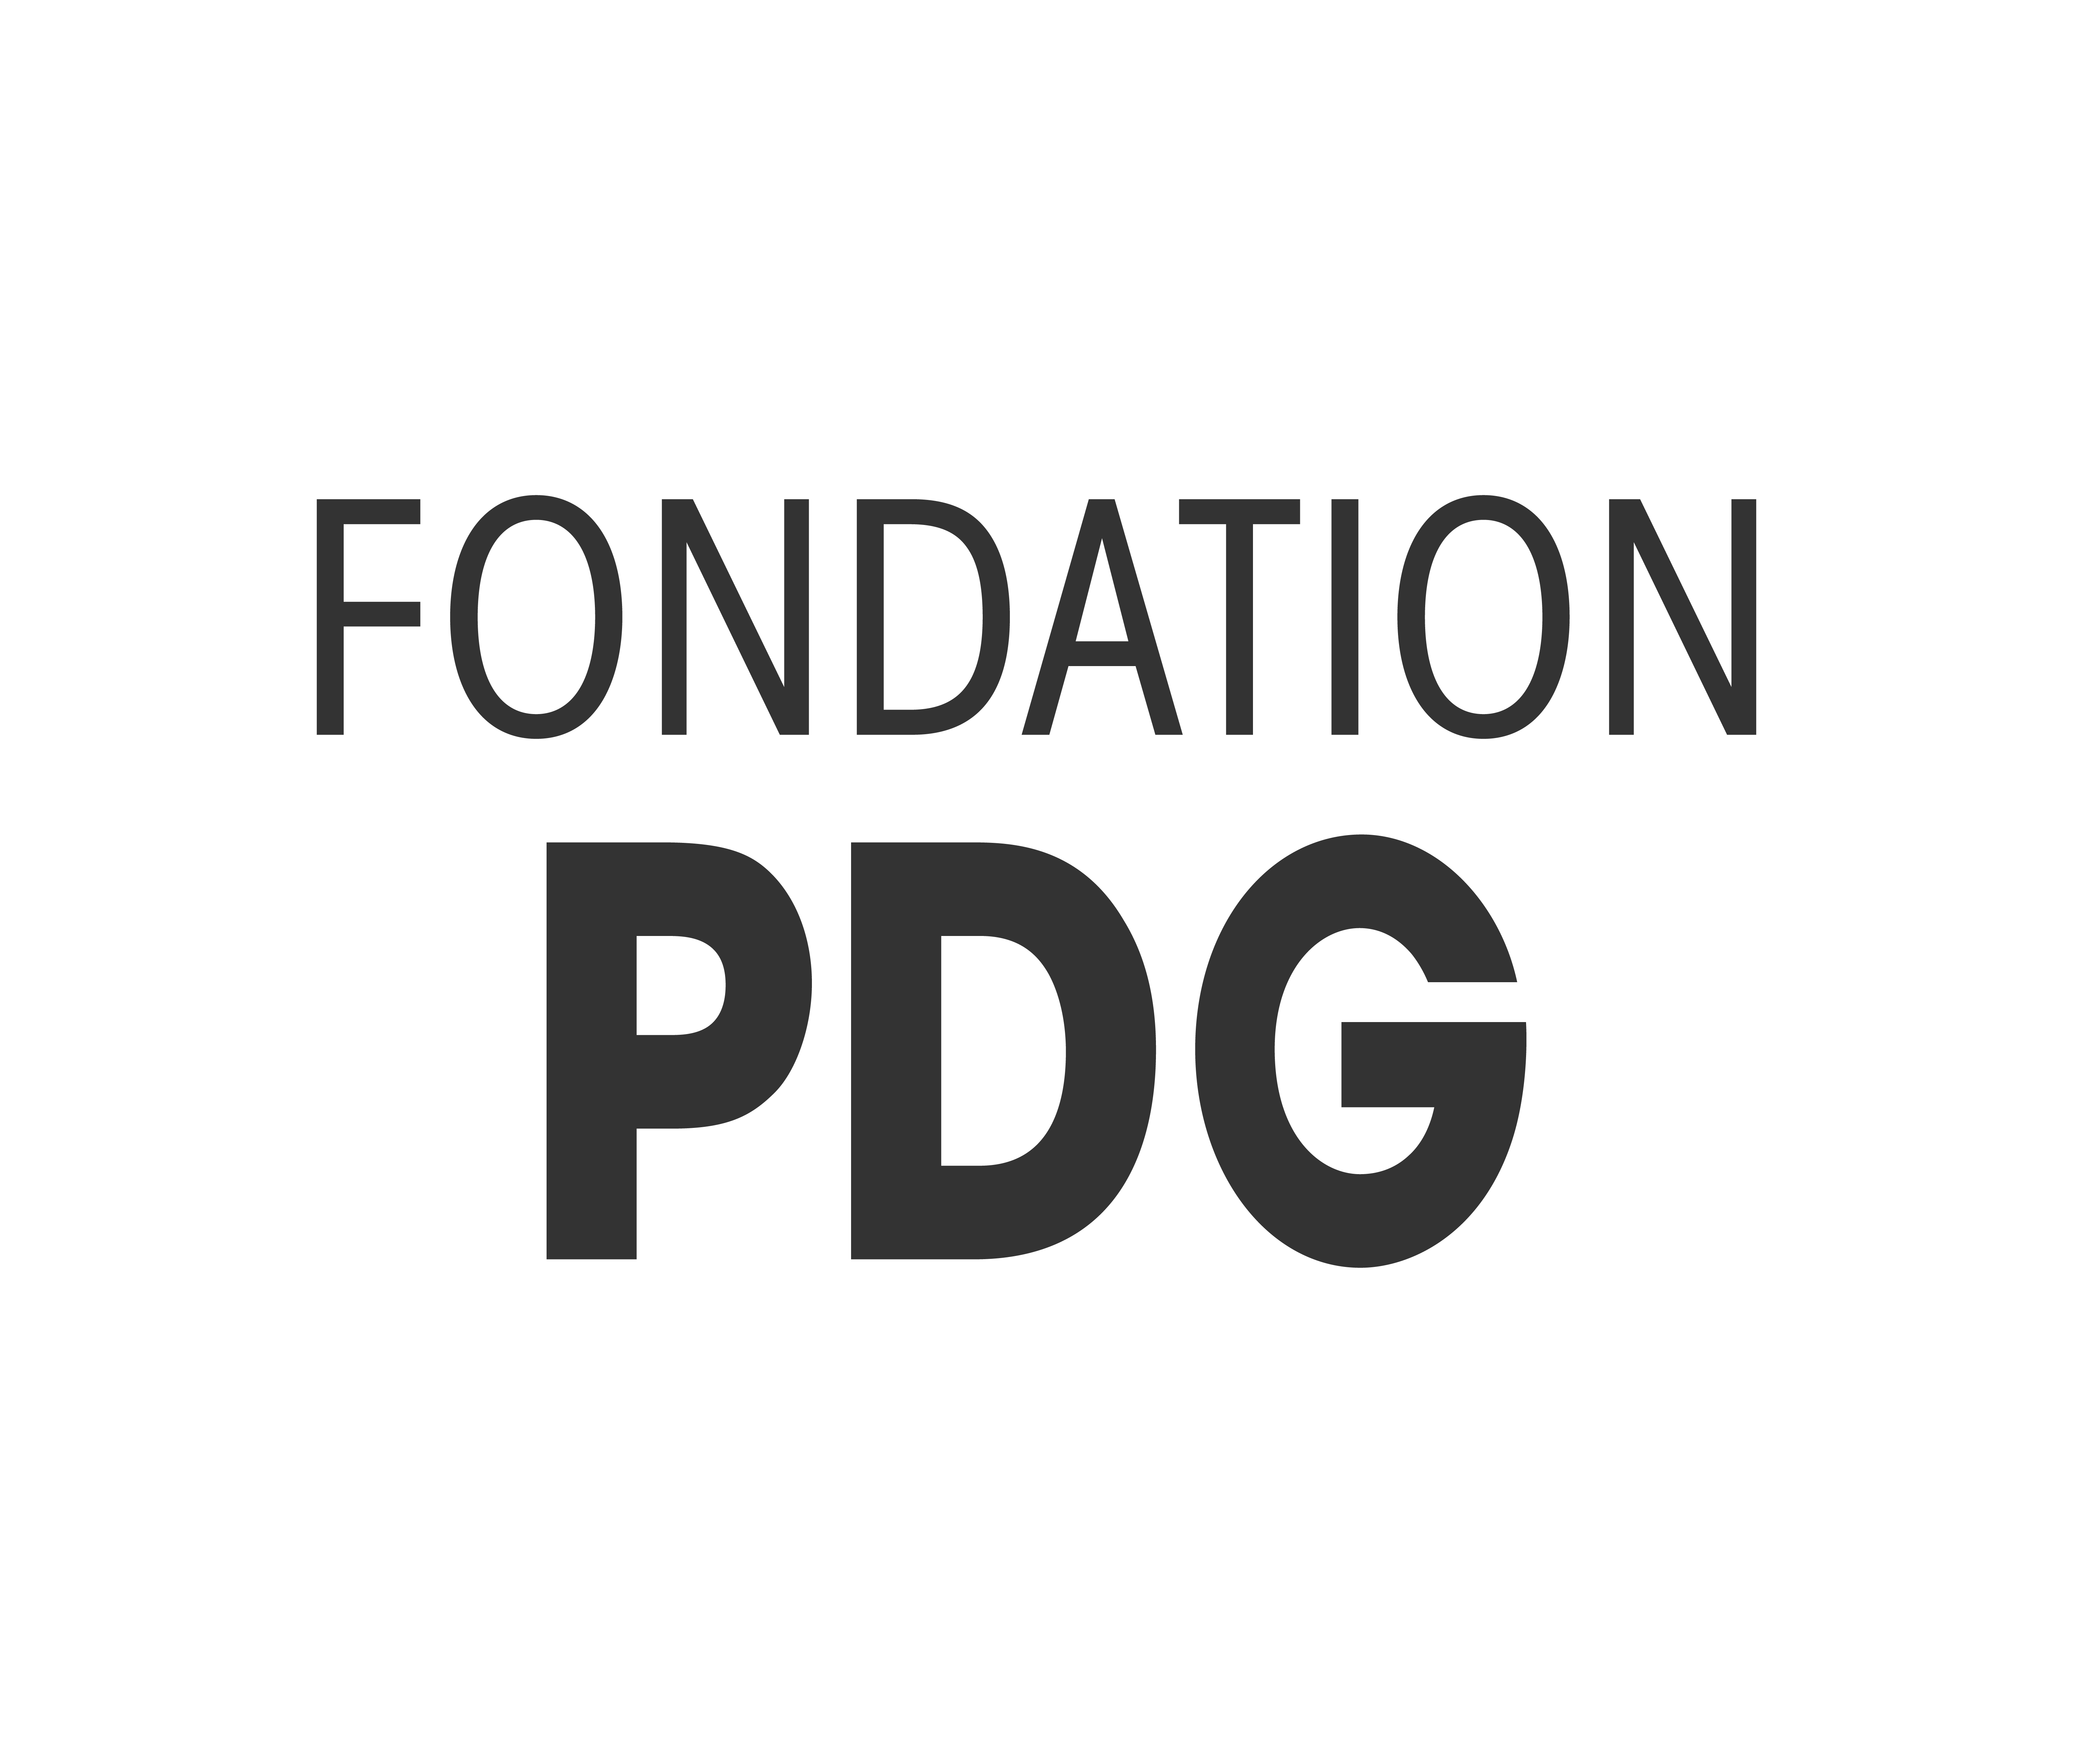 Fondation PDG 